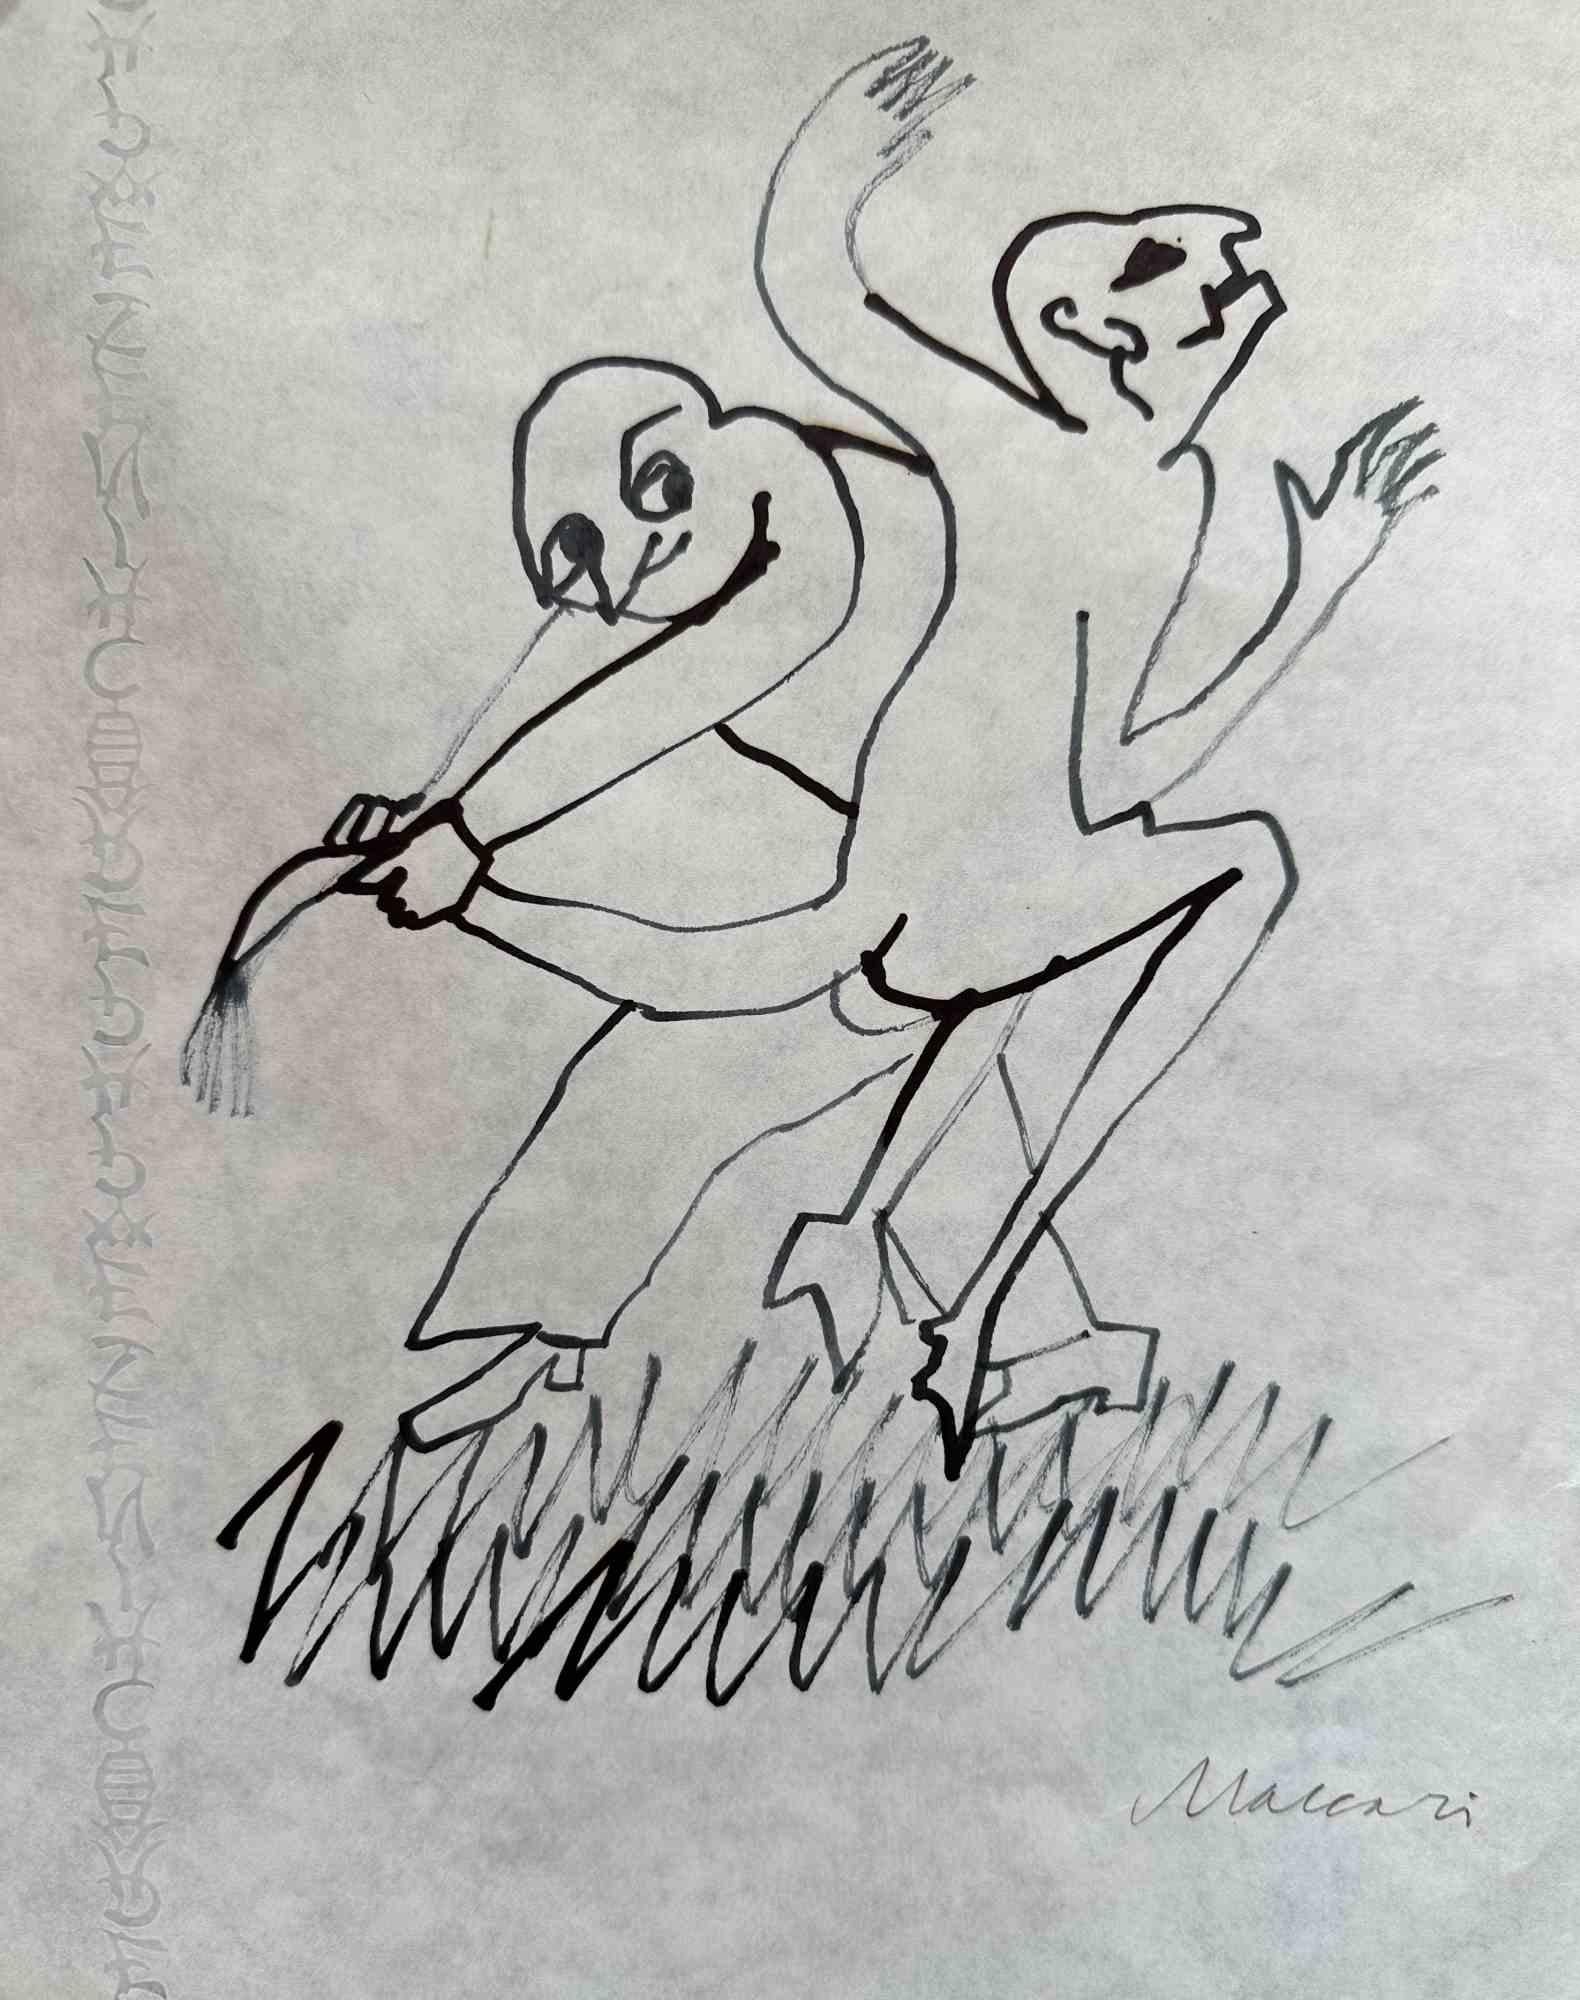 Dancing Figures - China Ink Drawing by Mino Maccari - 1975